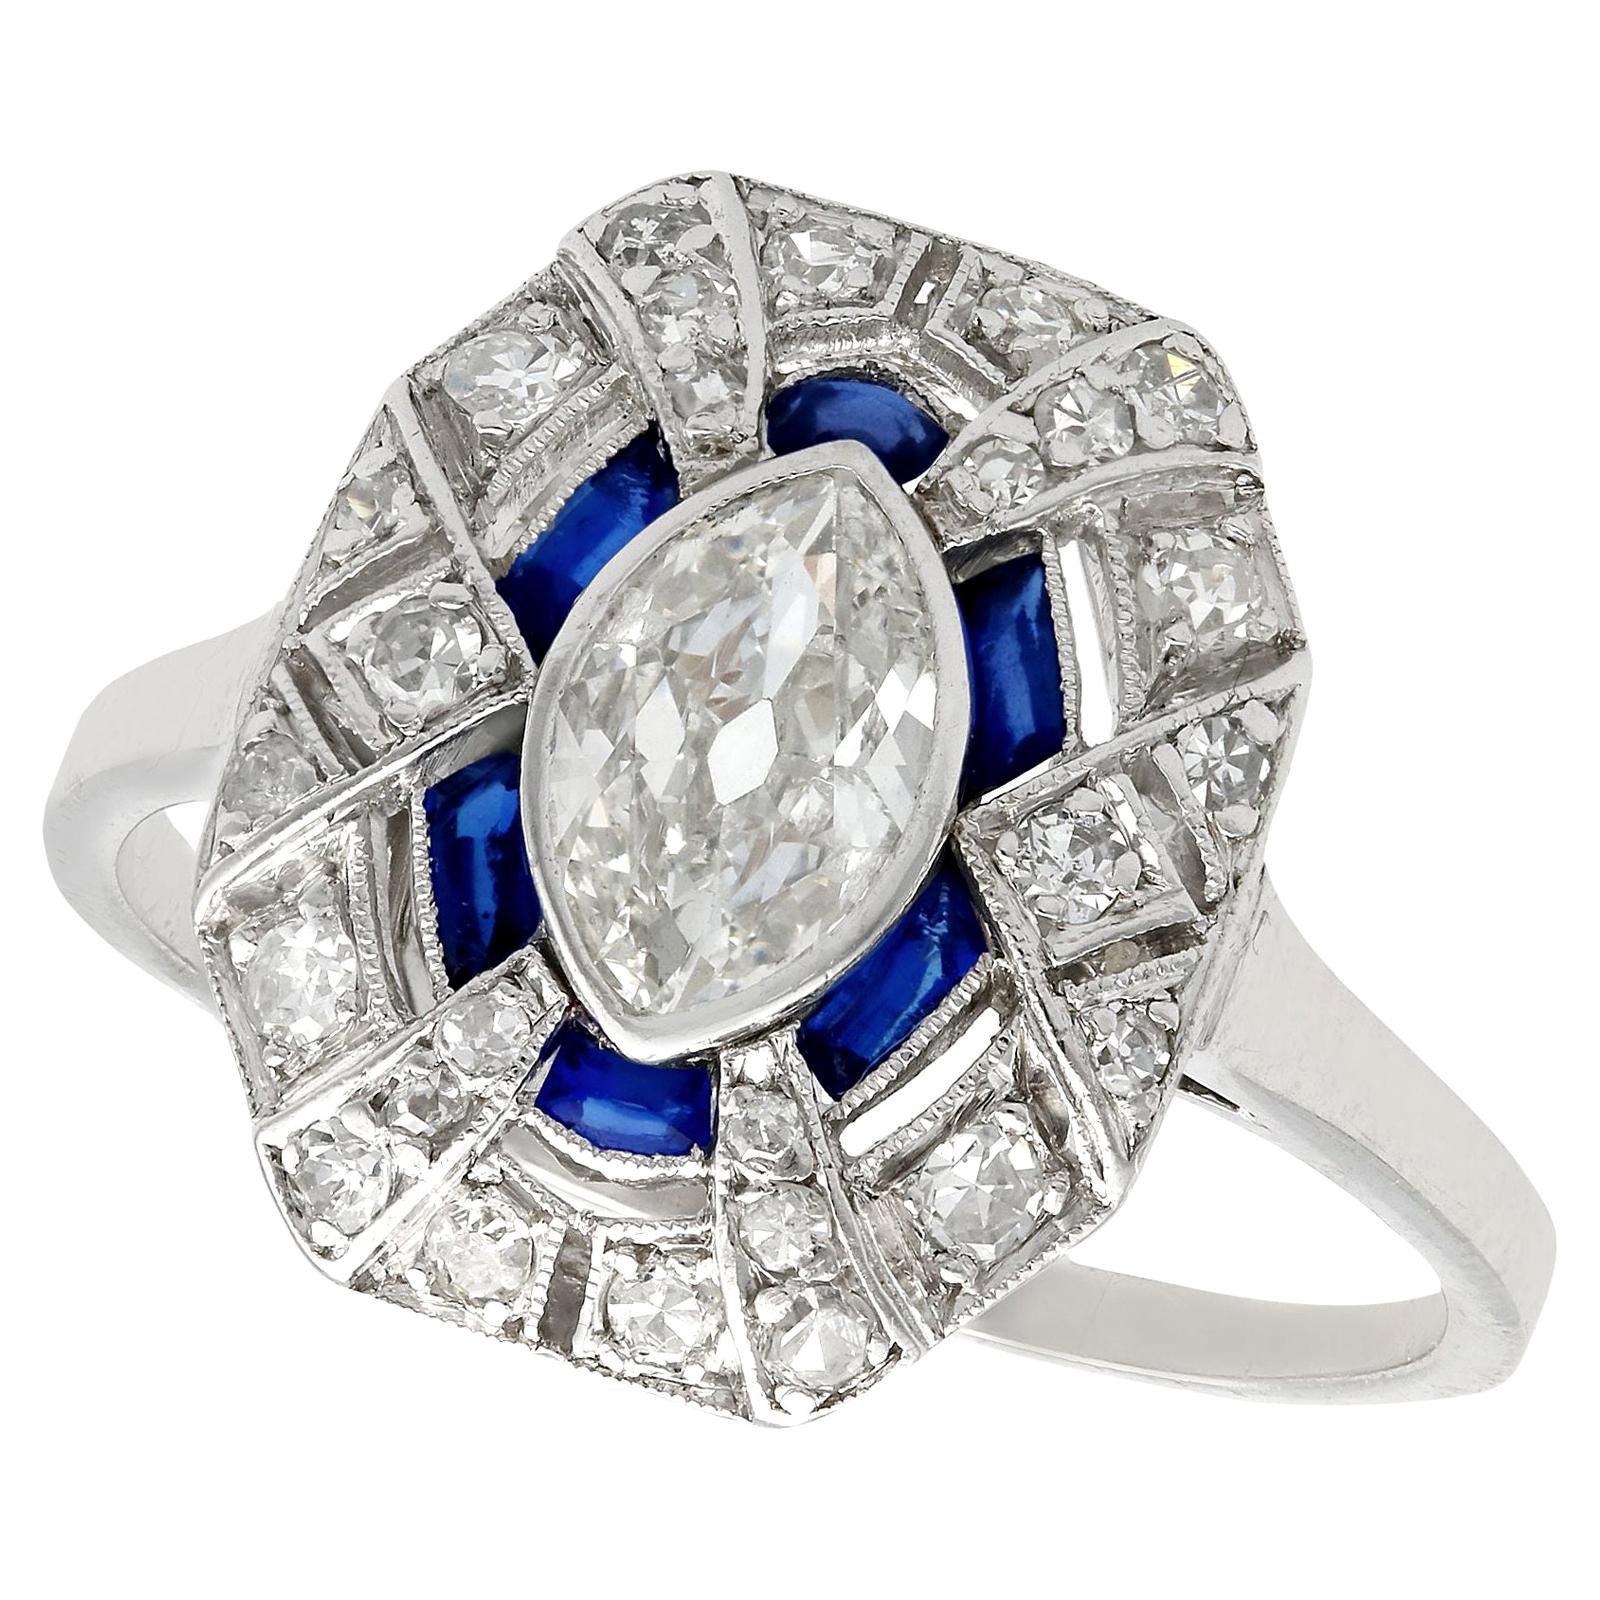 Antique French 1920s 1.39 Carat Diamond and Sapphire Platinum Dress Ring